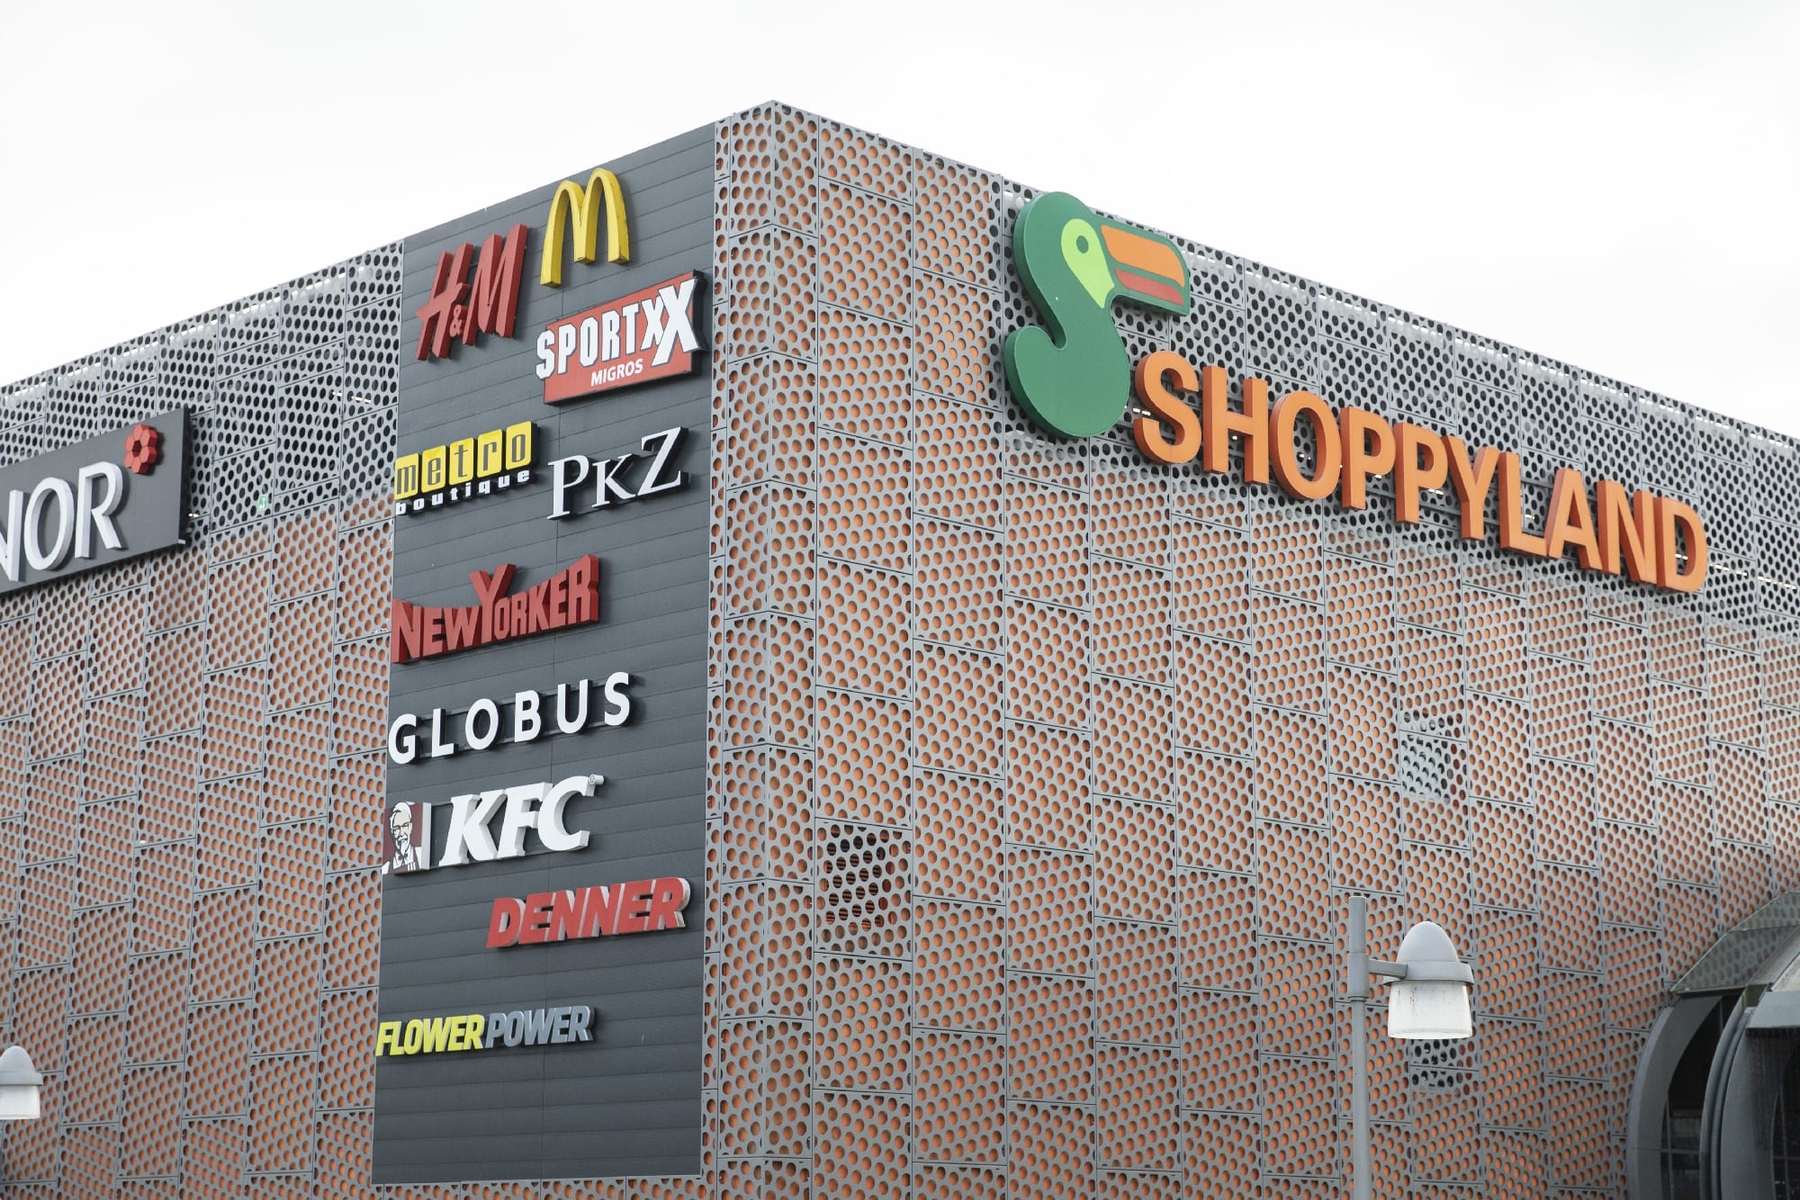 Shoppyland Schönbühl - Shopping Center